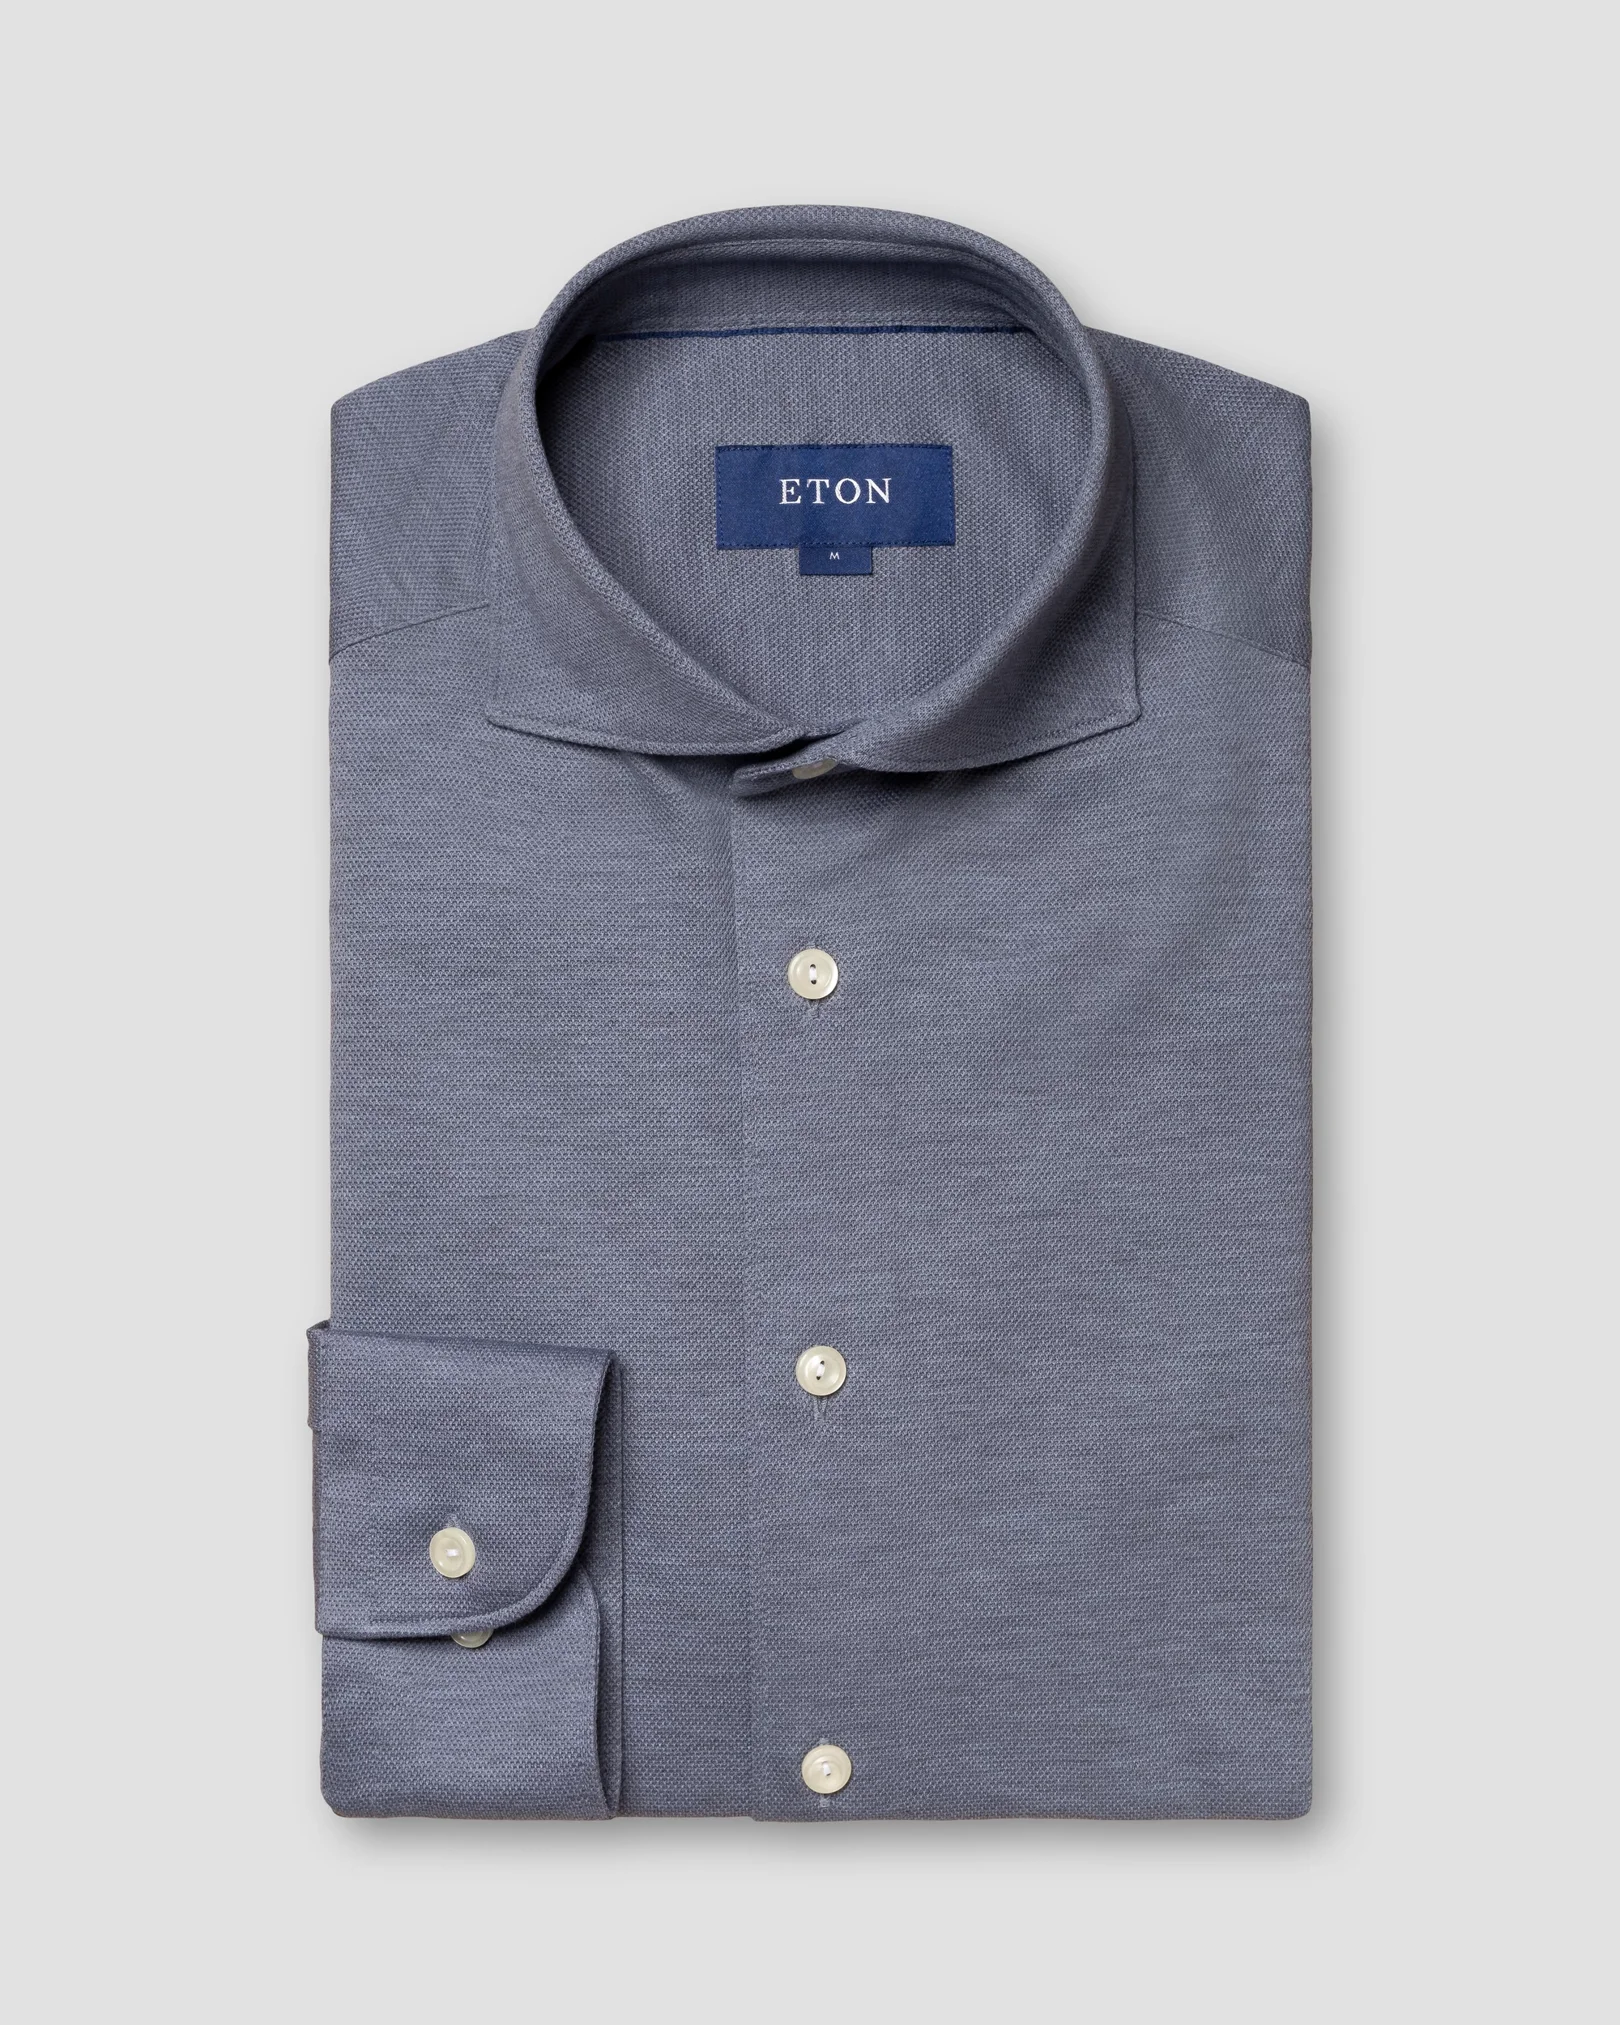 Eton - blue pique shirt long sleeve